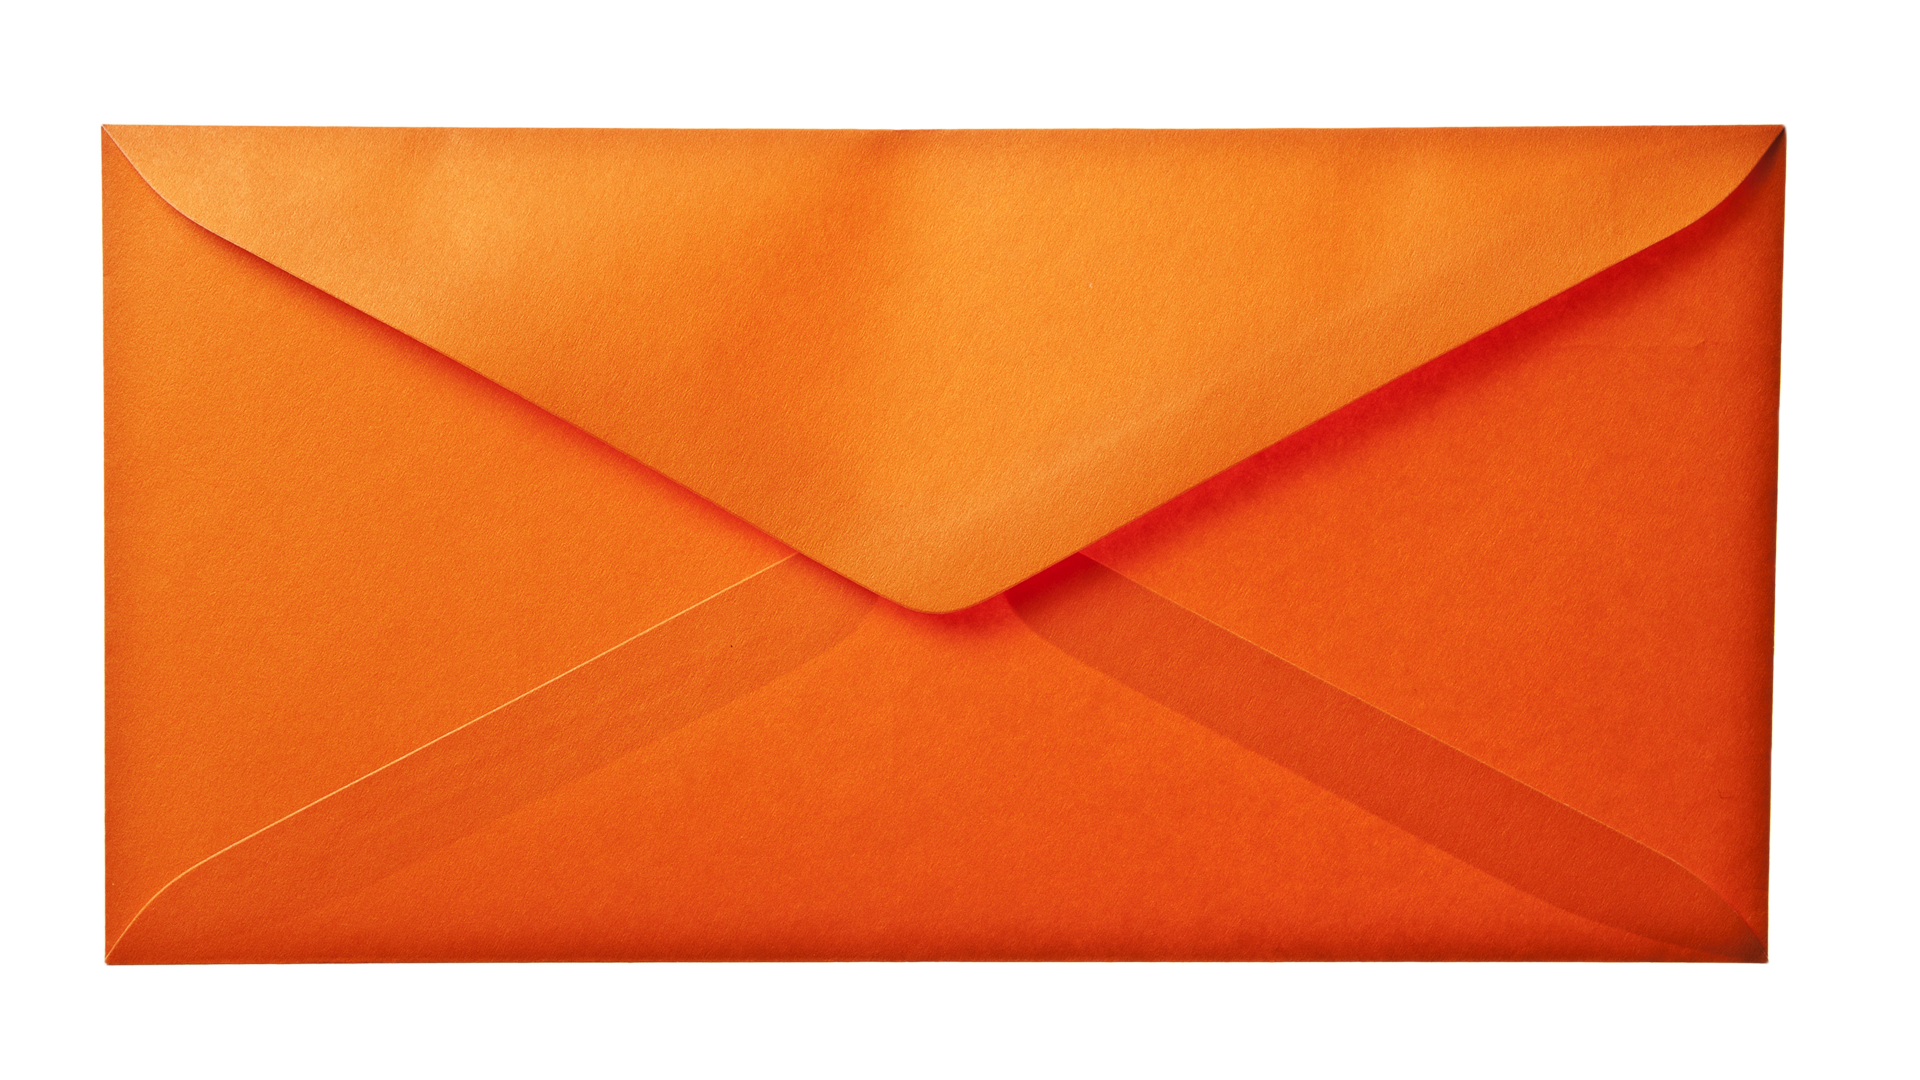 envelope, Envelope, White Env